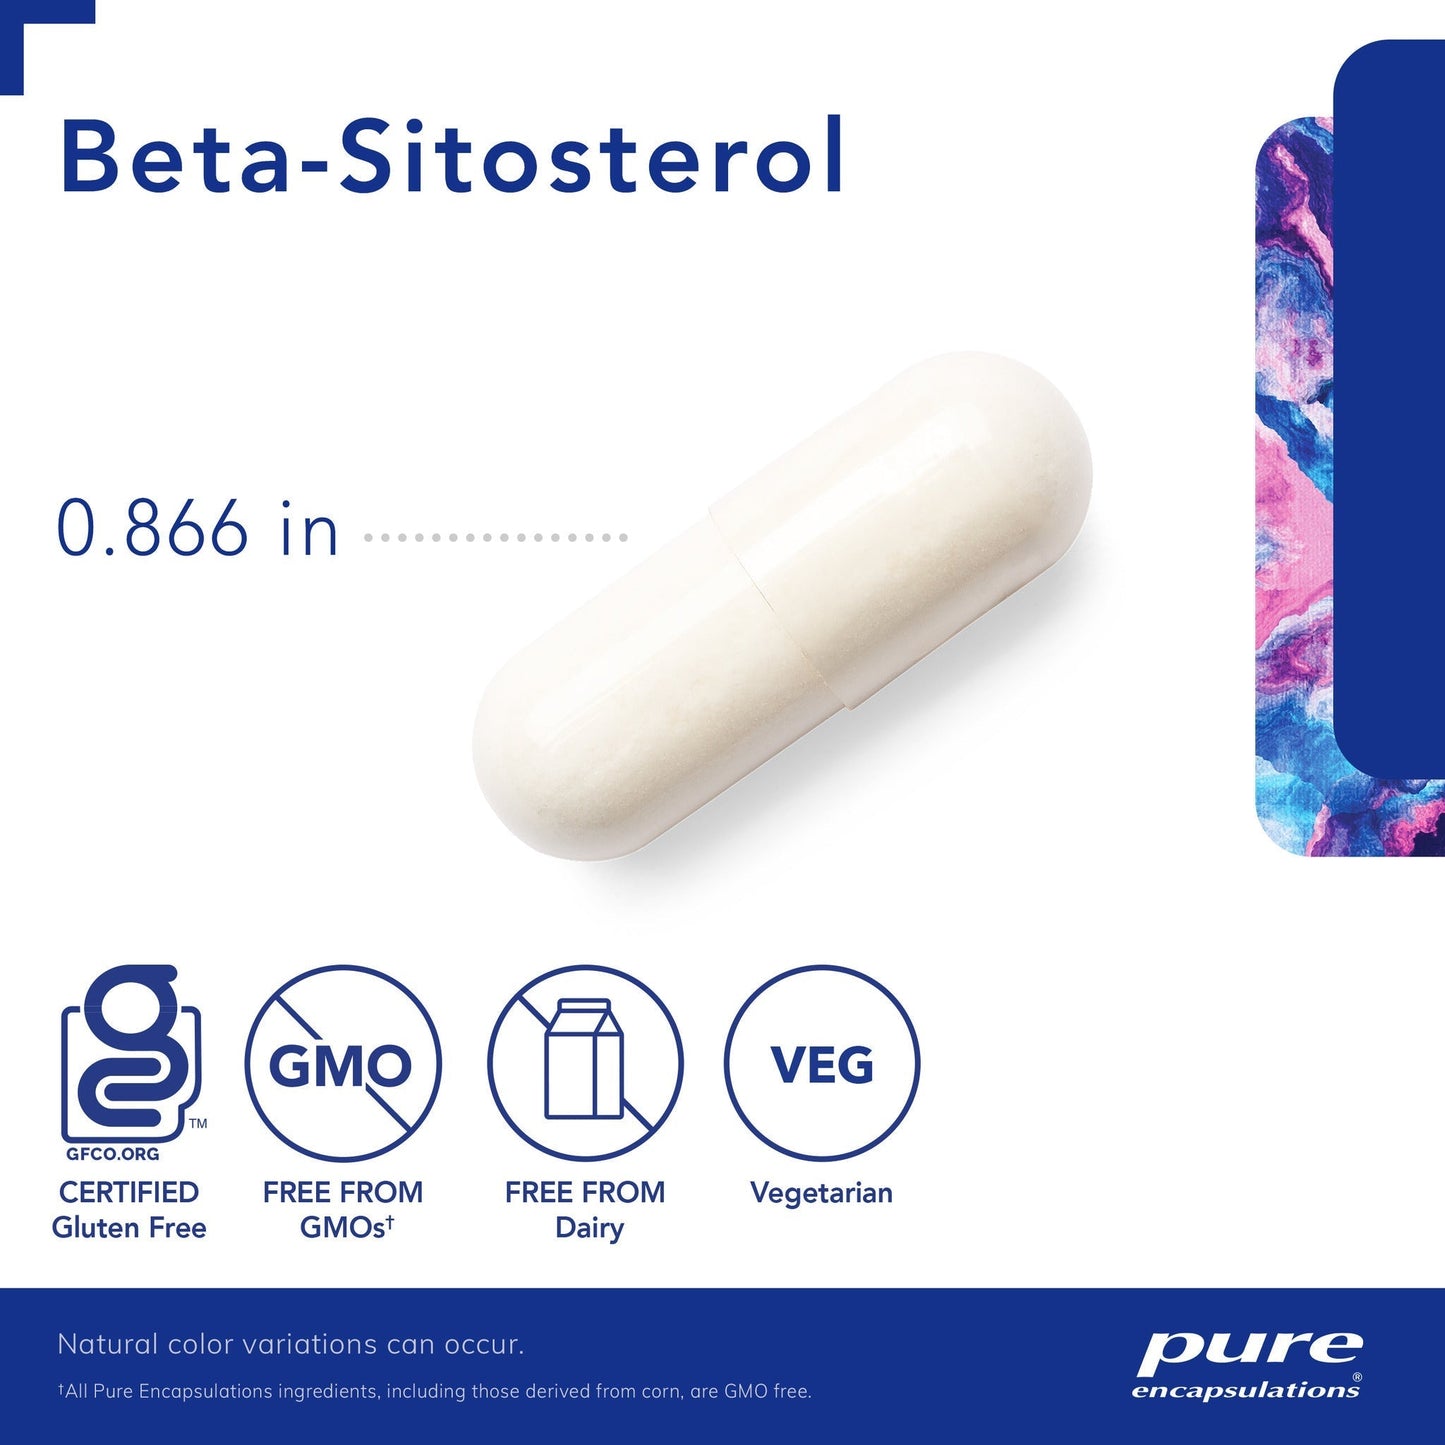 Beta Sitosterol